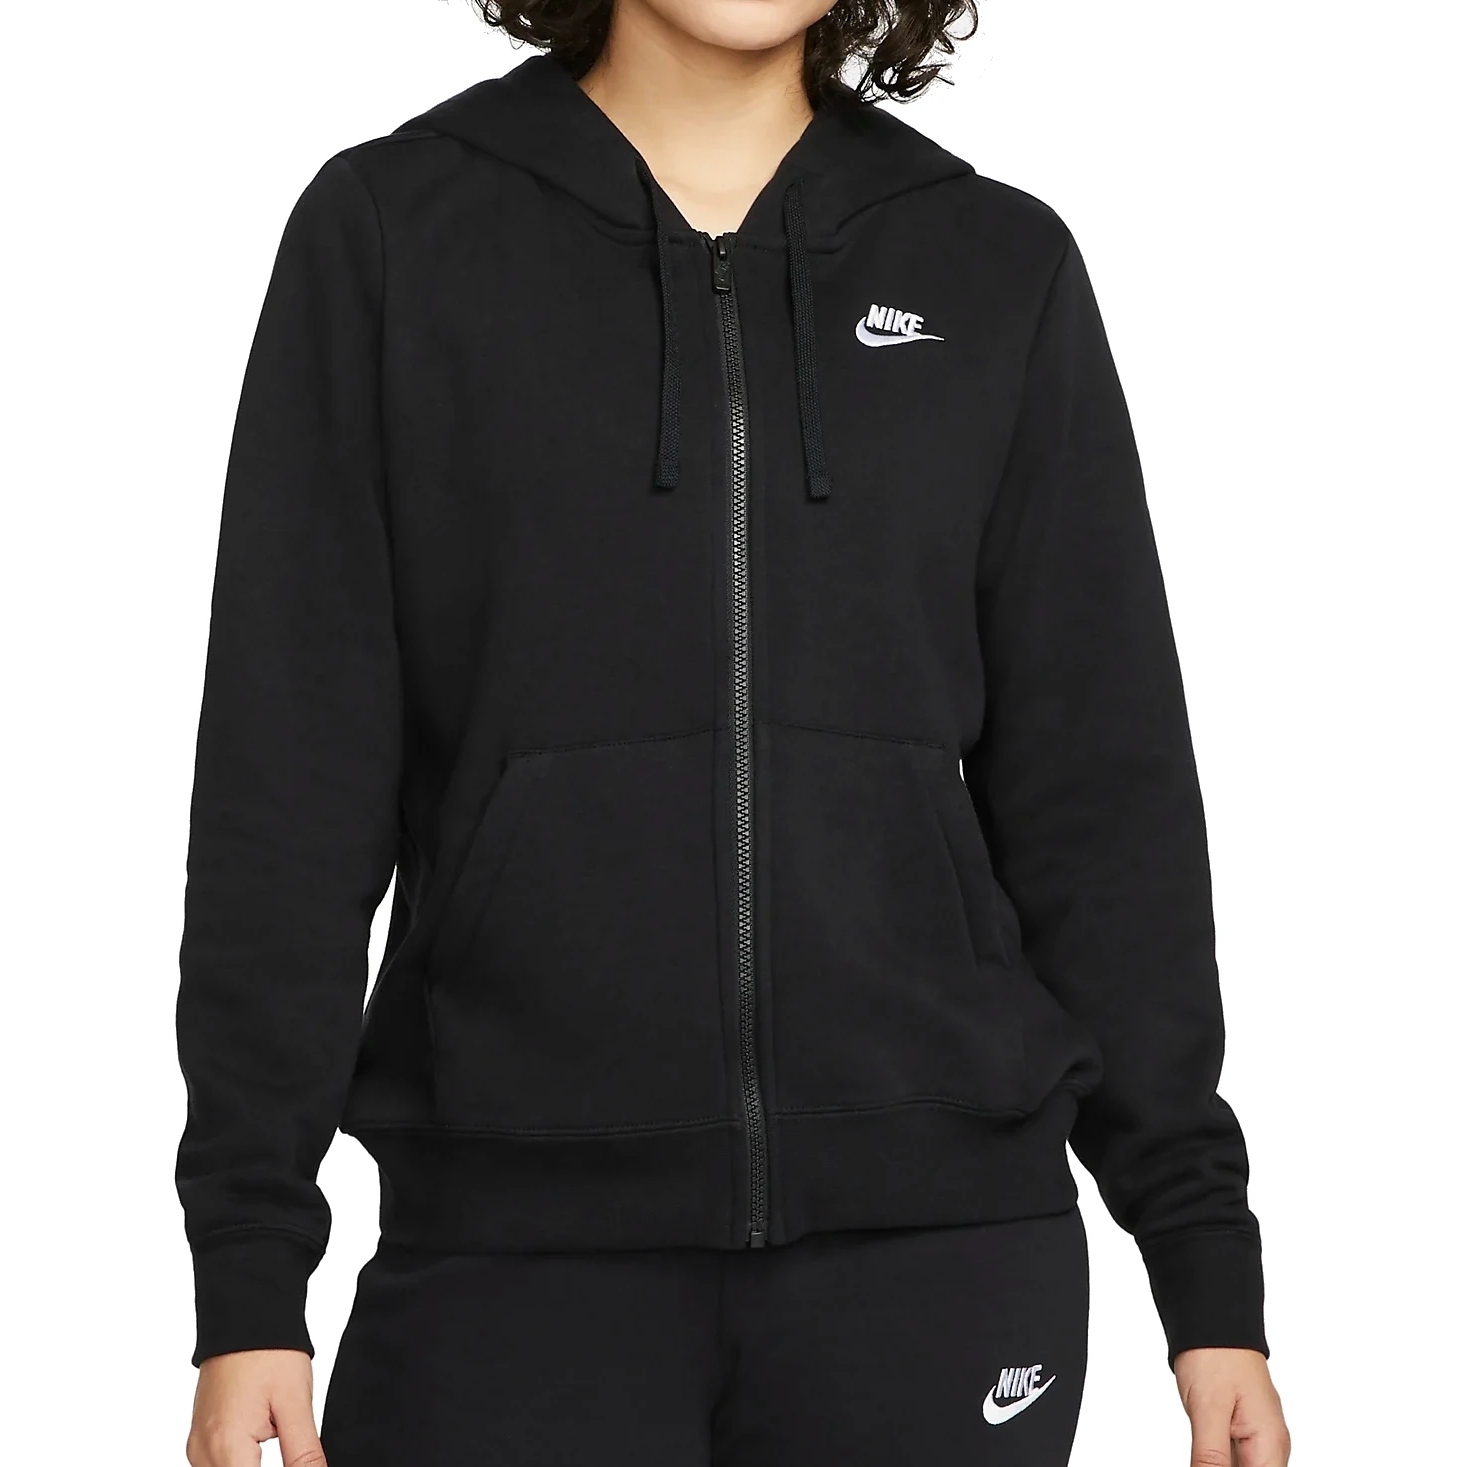 Produktbild von Nike Sportswear Club Fleece Kapuzenjacke Damen - schwarz/weiß DQ5471-010